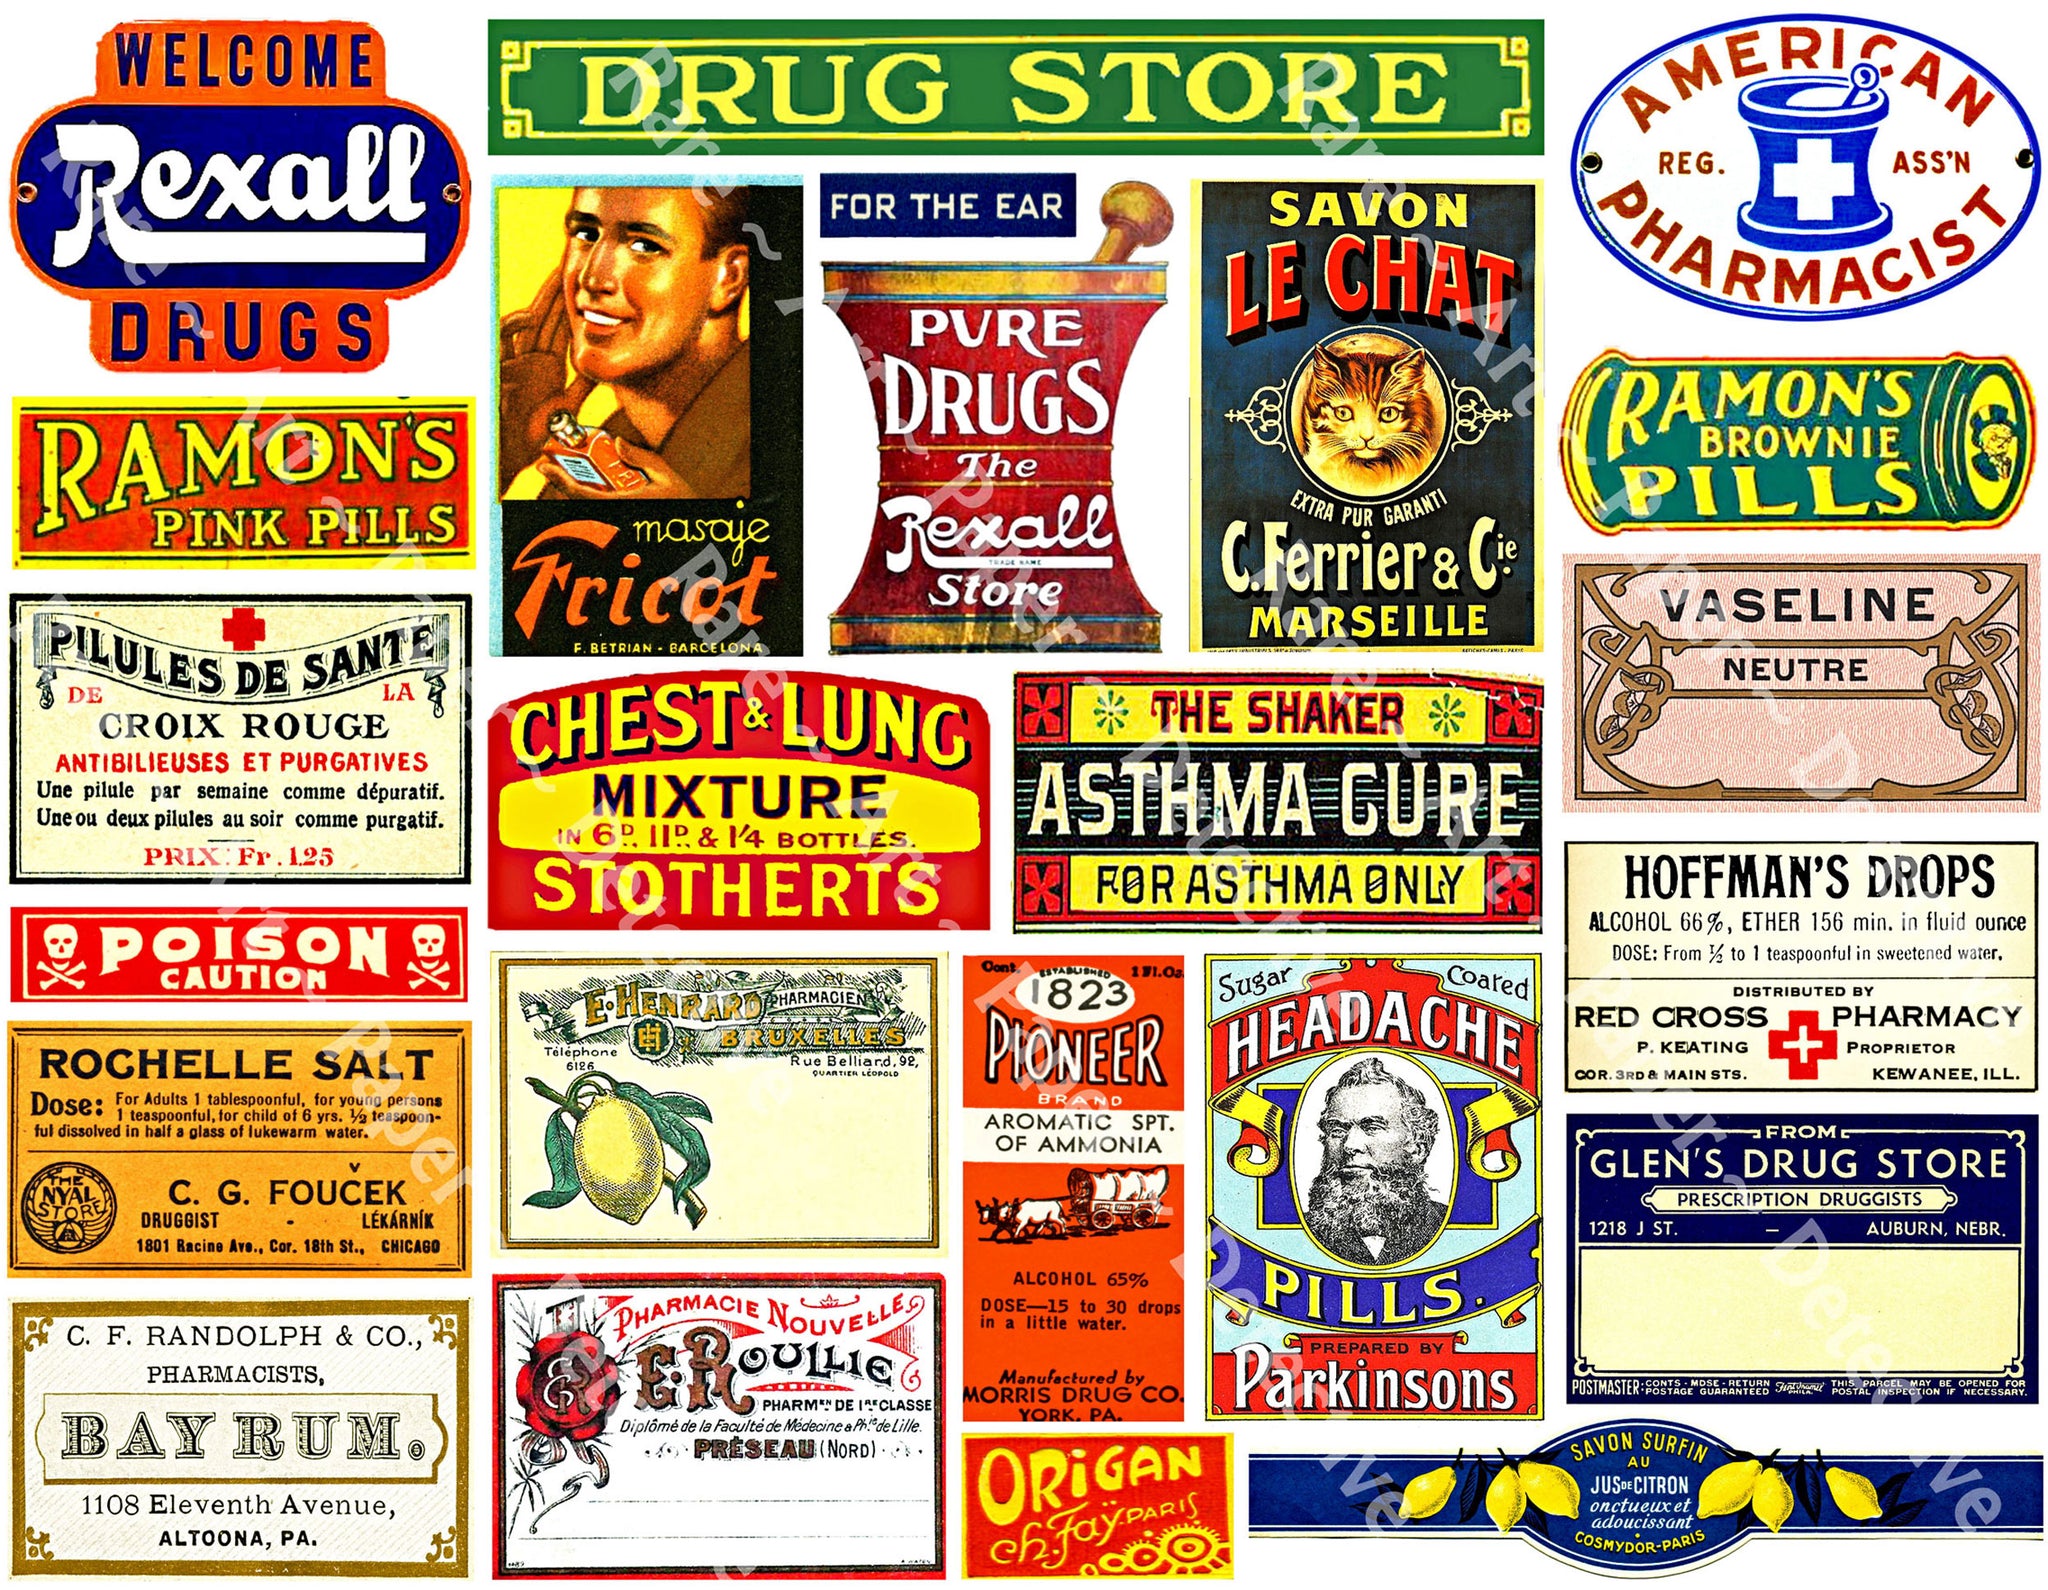 24 Apothecary Stickers, Bathroom Décor & Medicine Cabinet Labels